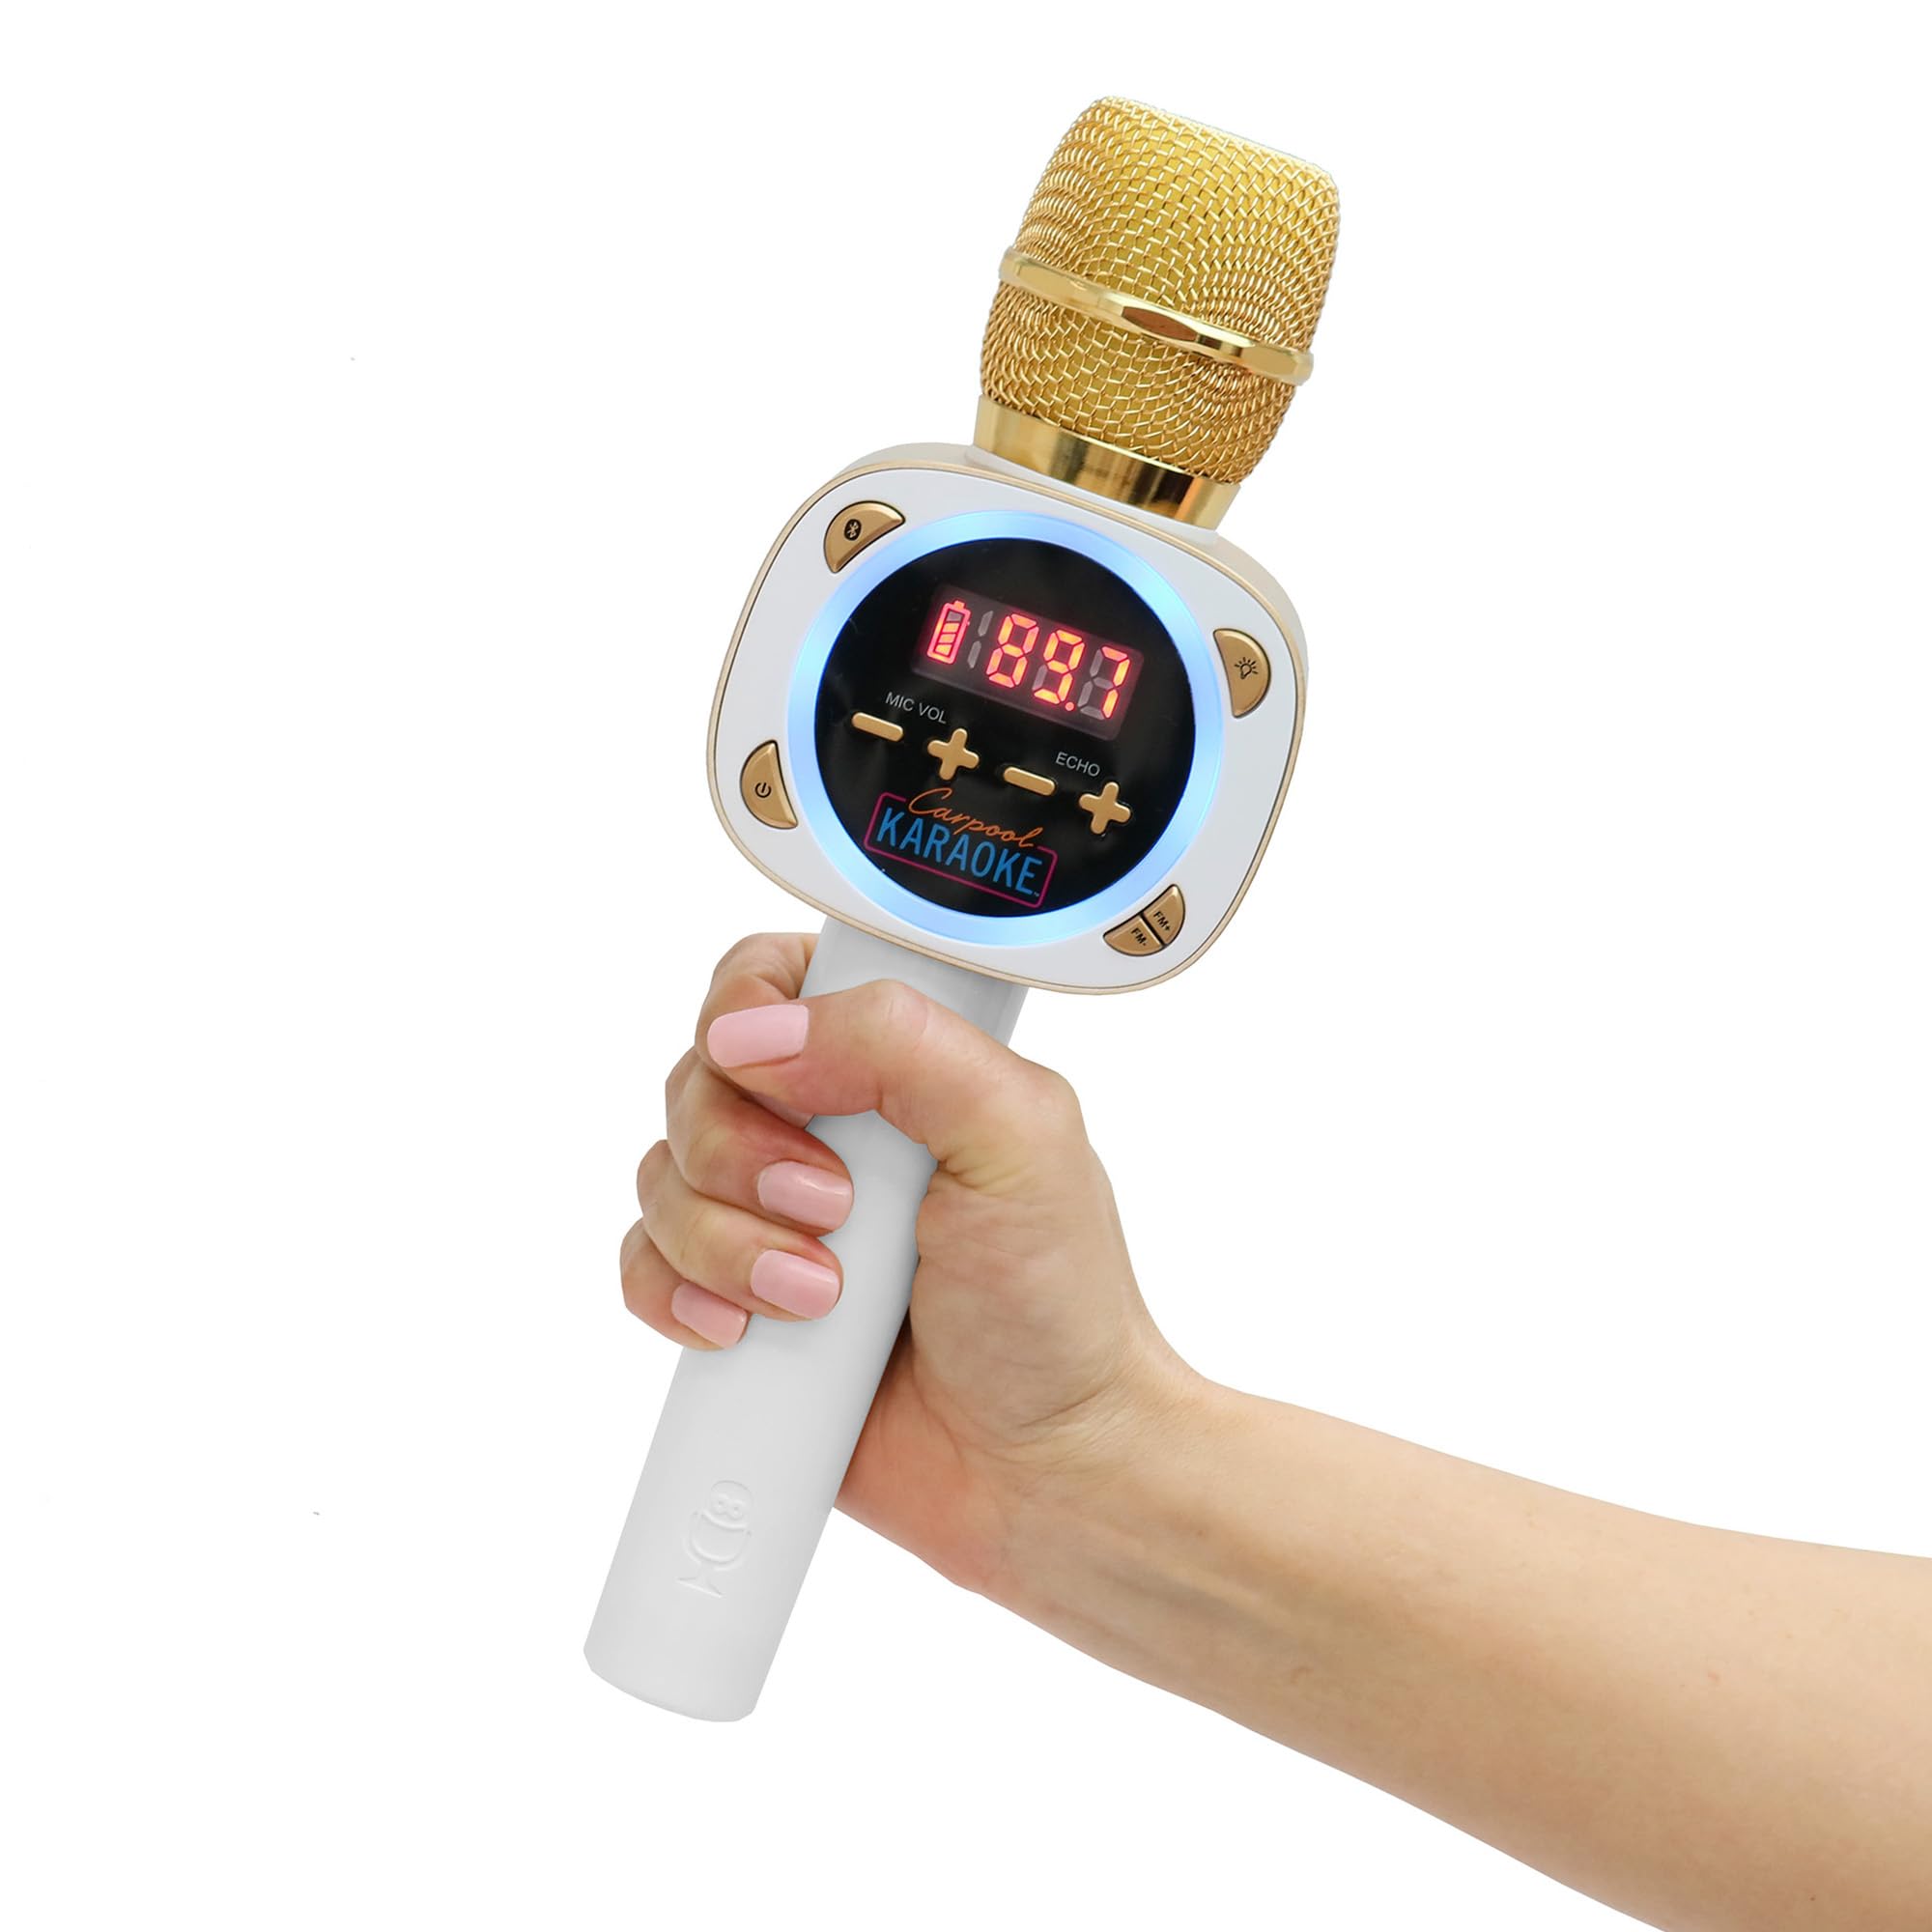 Carpool Karaoke Machine for Kids & Adults - Official Carpool Karaoke, Bluetooth Microphone $19.99